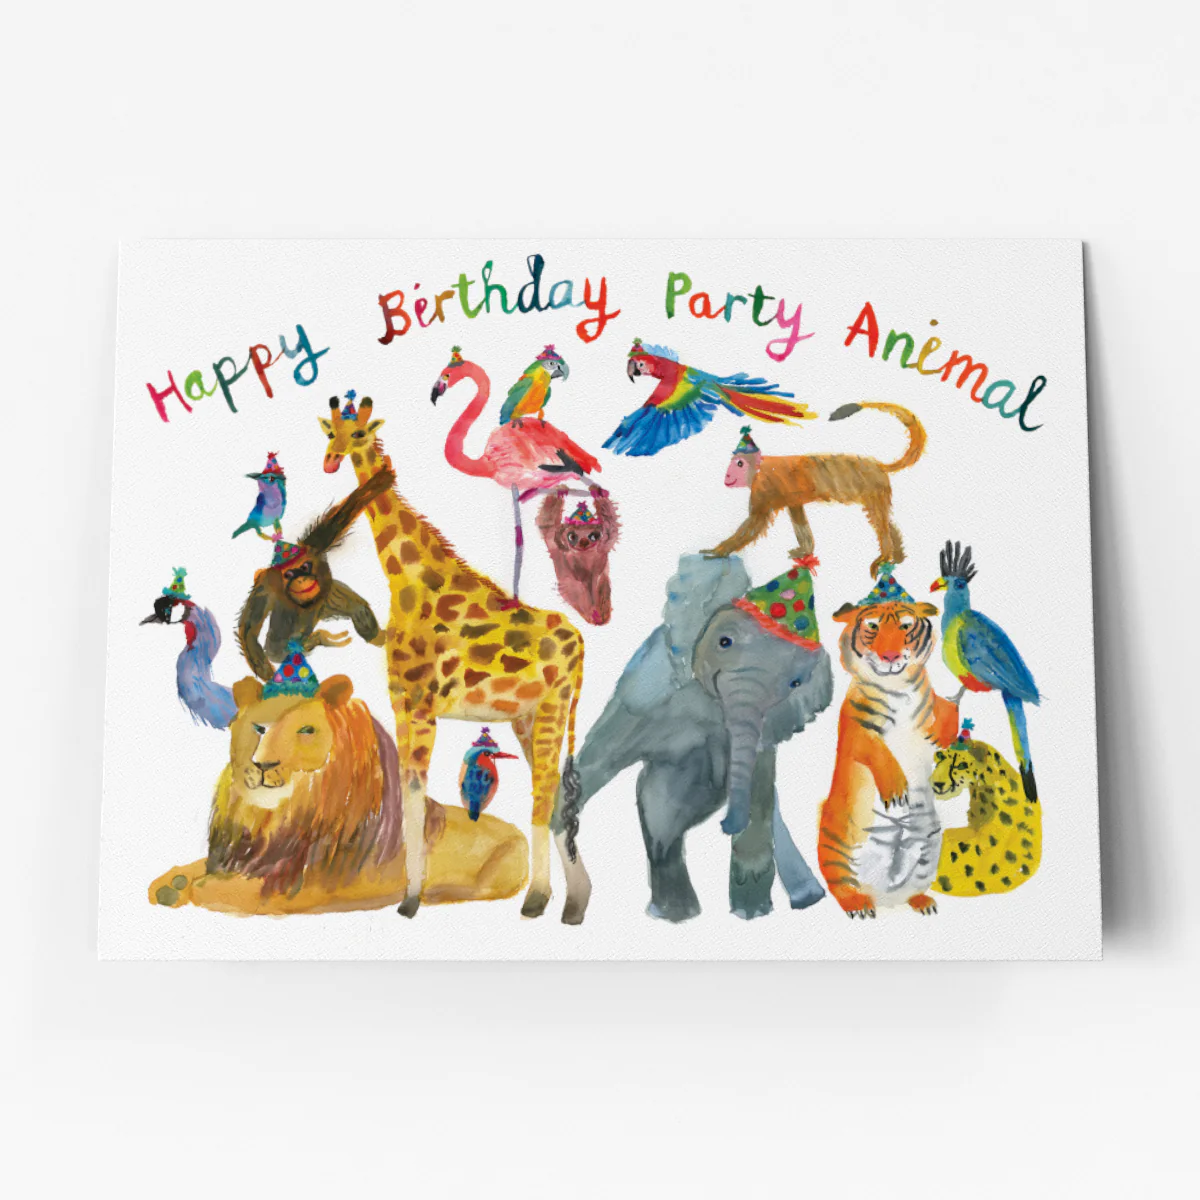 Happy Birthday Party Animal Birthday Card